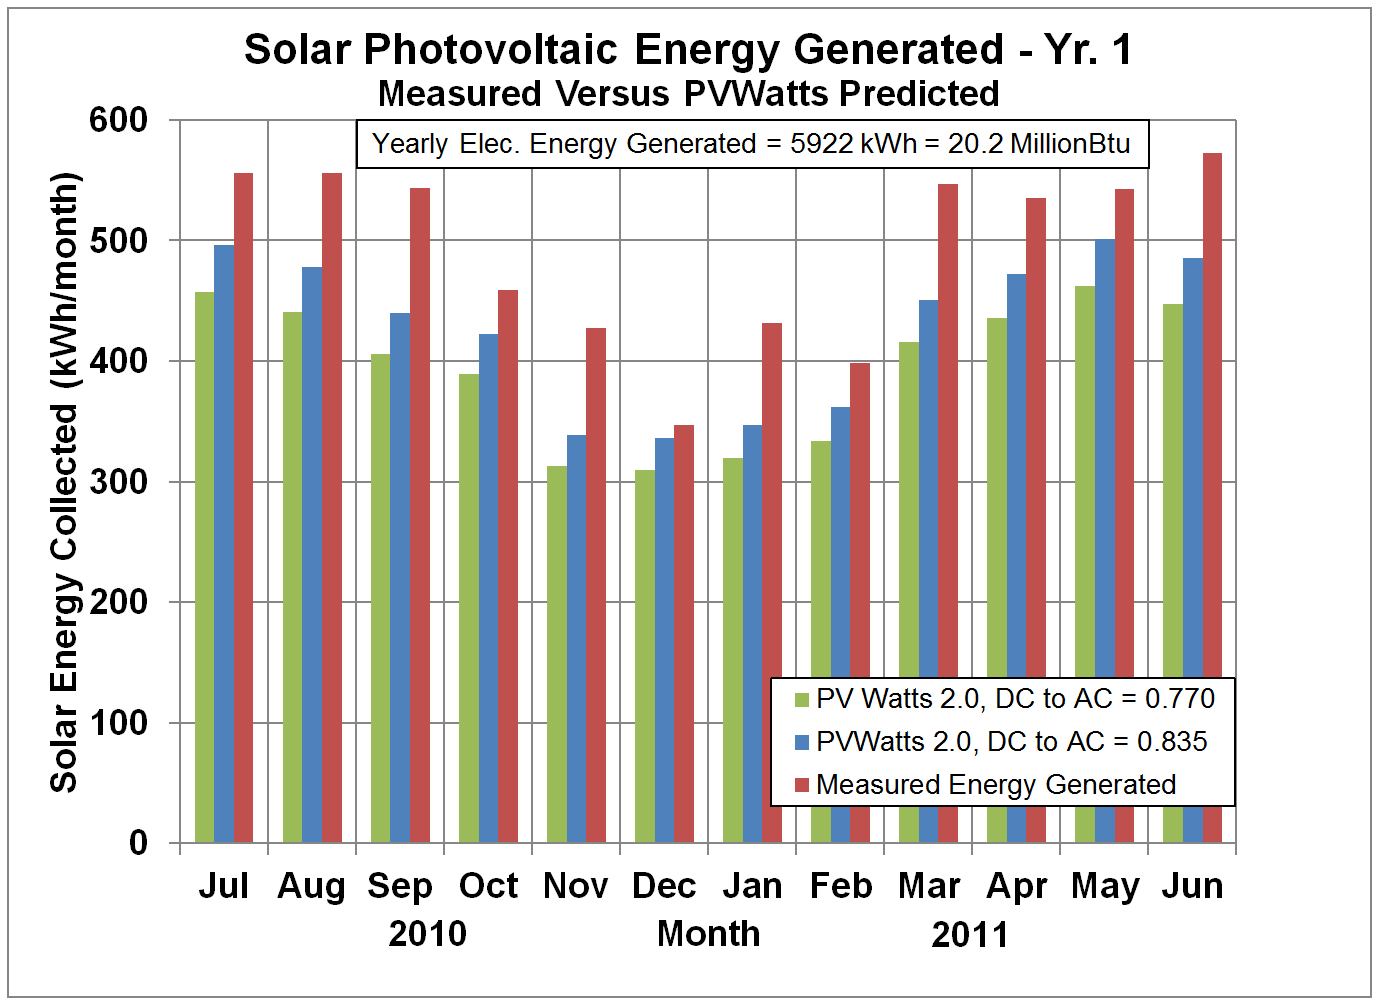 Solar PV Energy Predicted versus Generated - Yr. 1